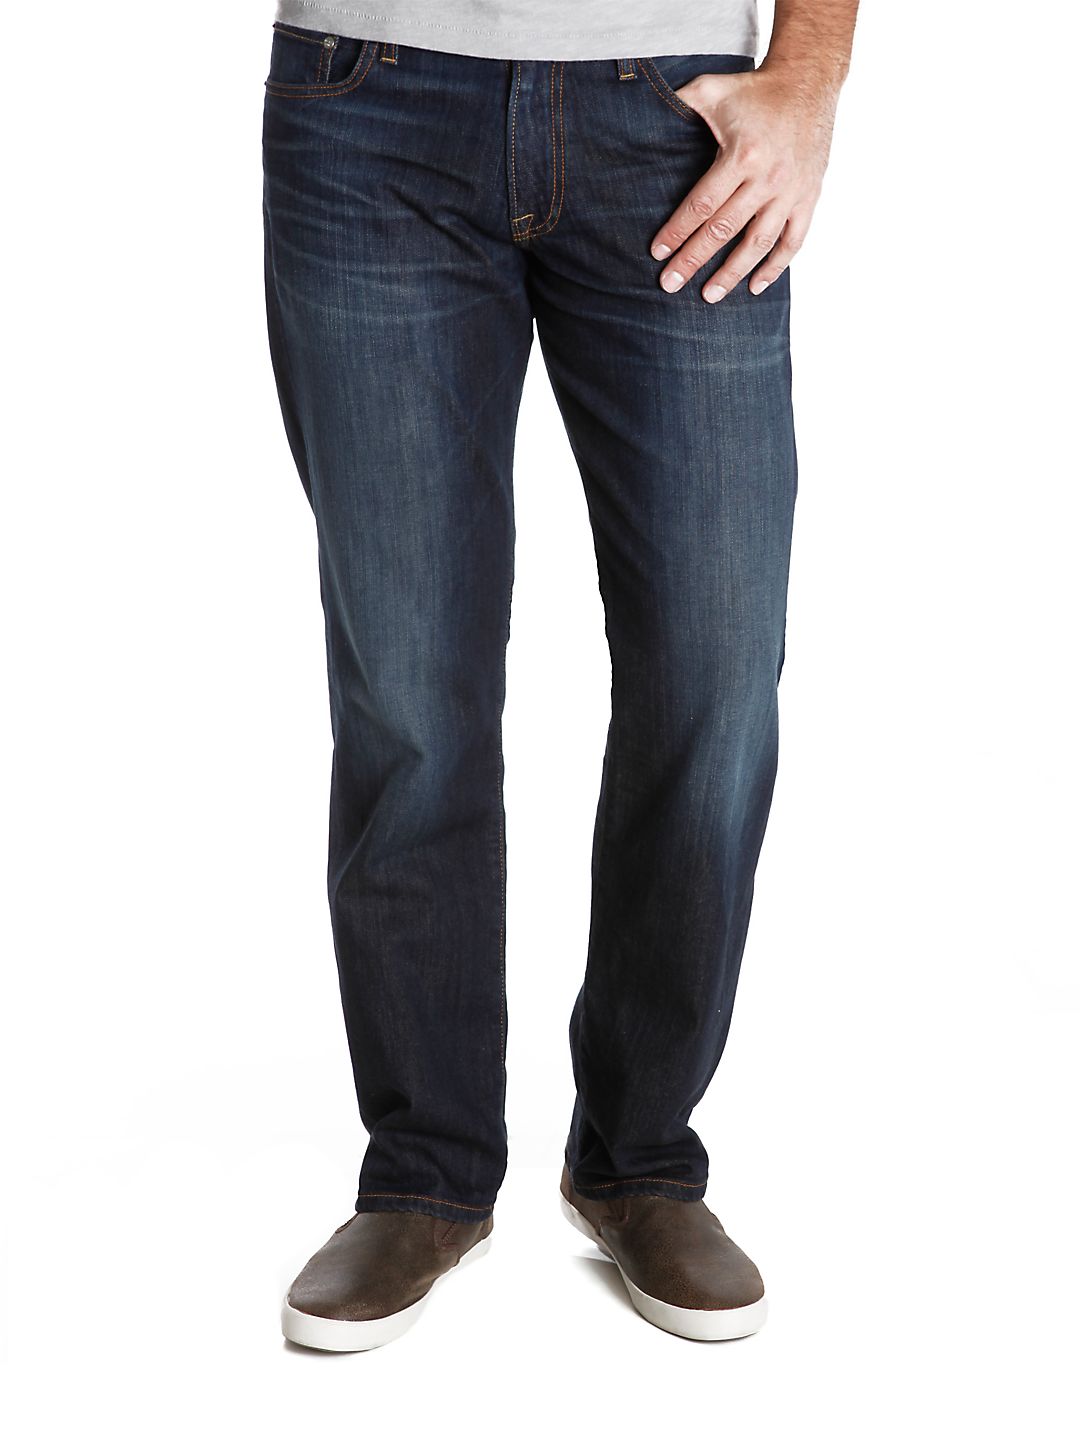 221 Original Straight Barite Wash Jeans - image 1 of 4